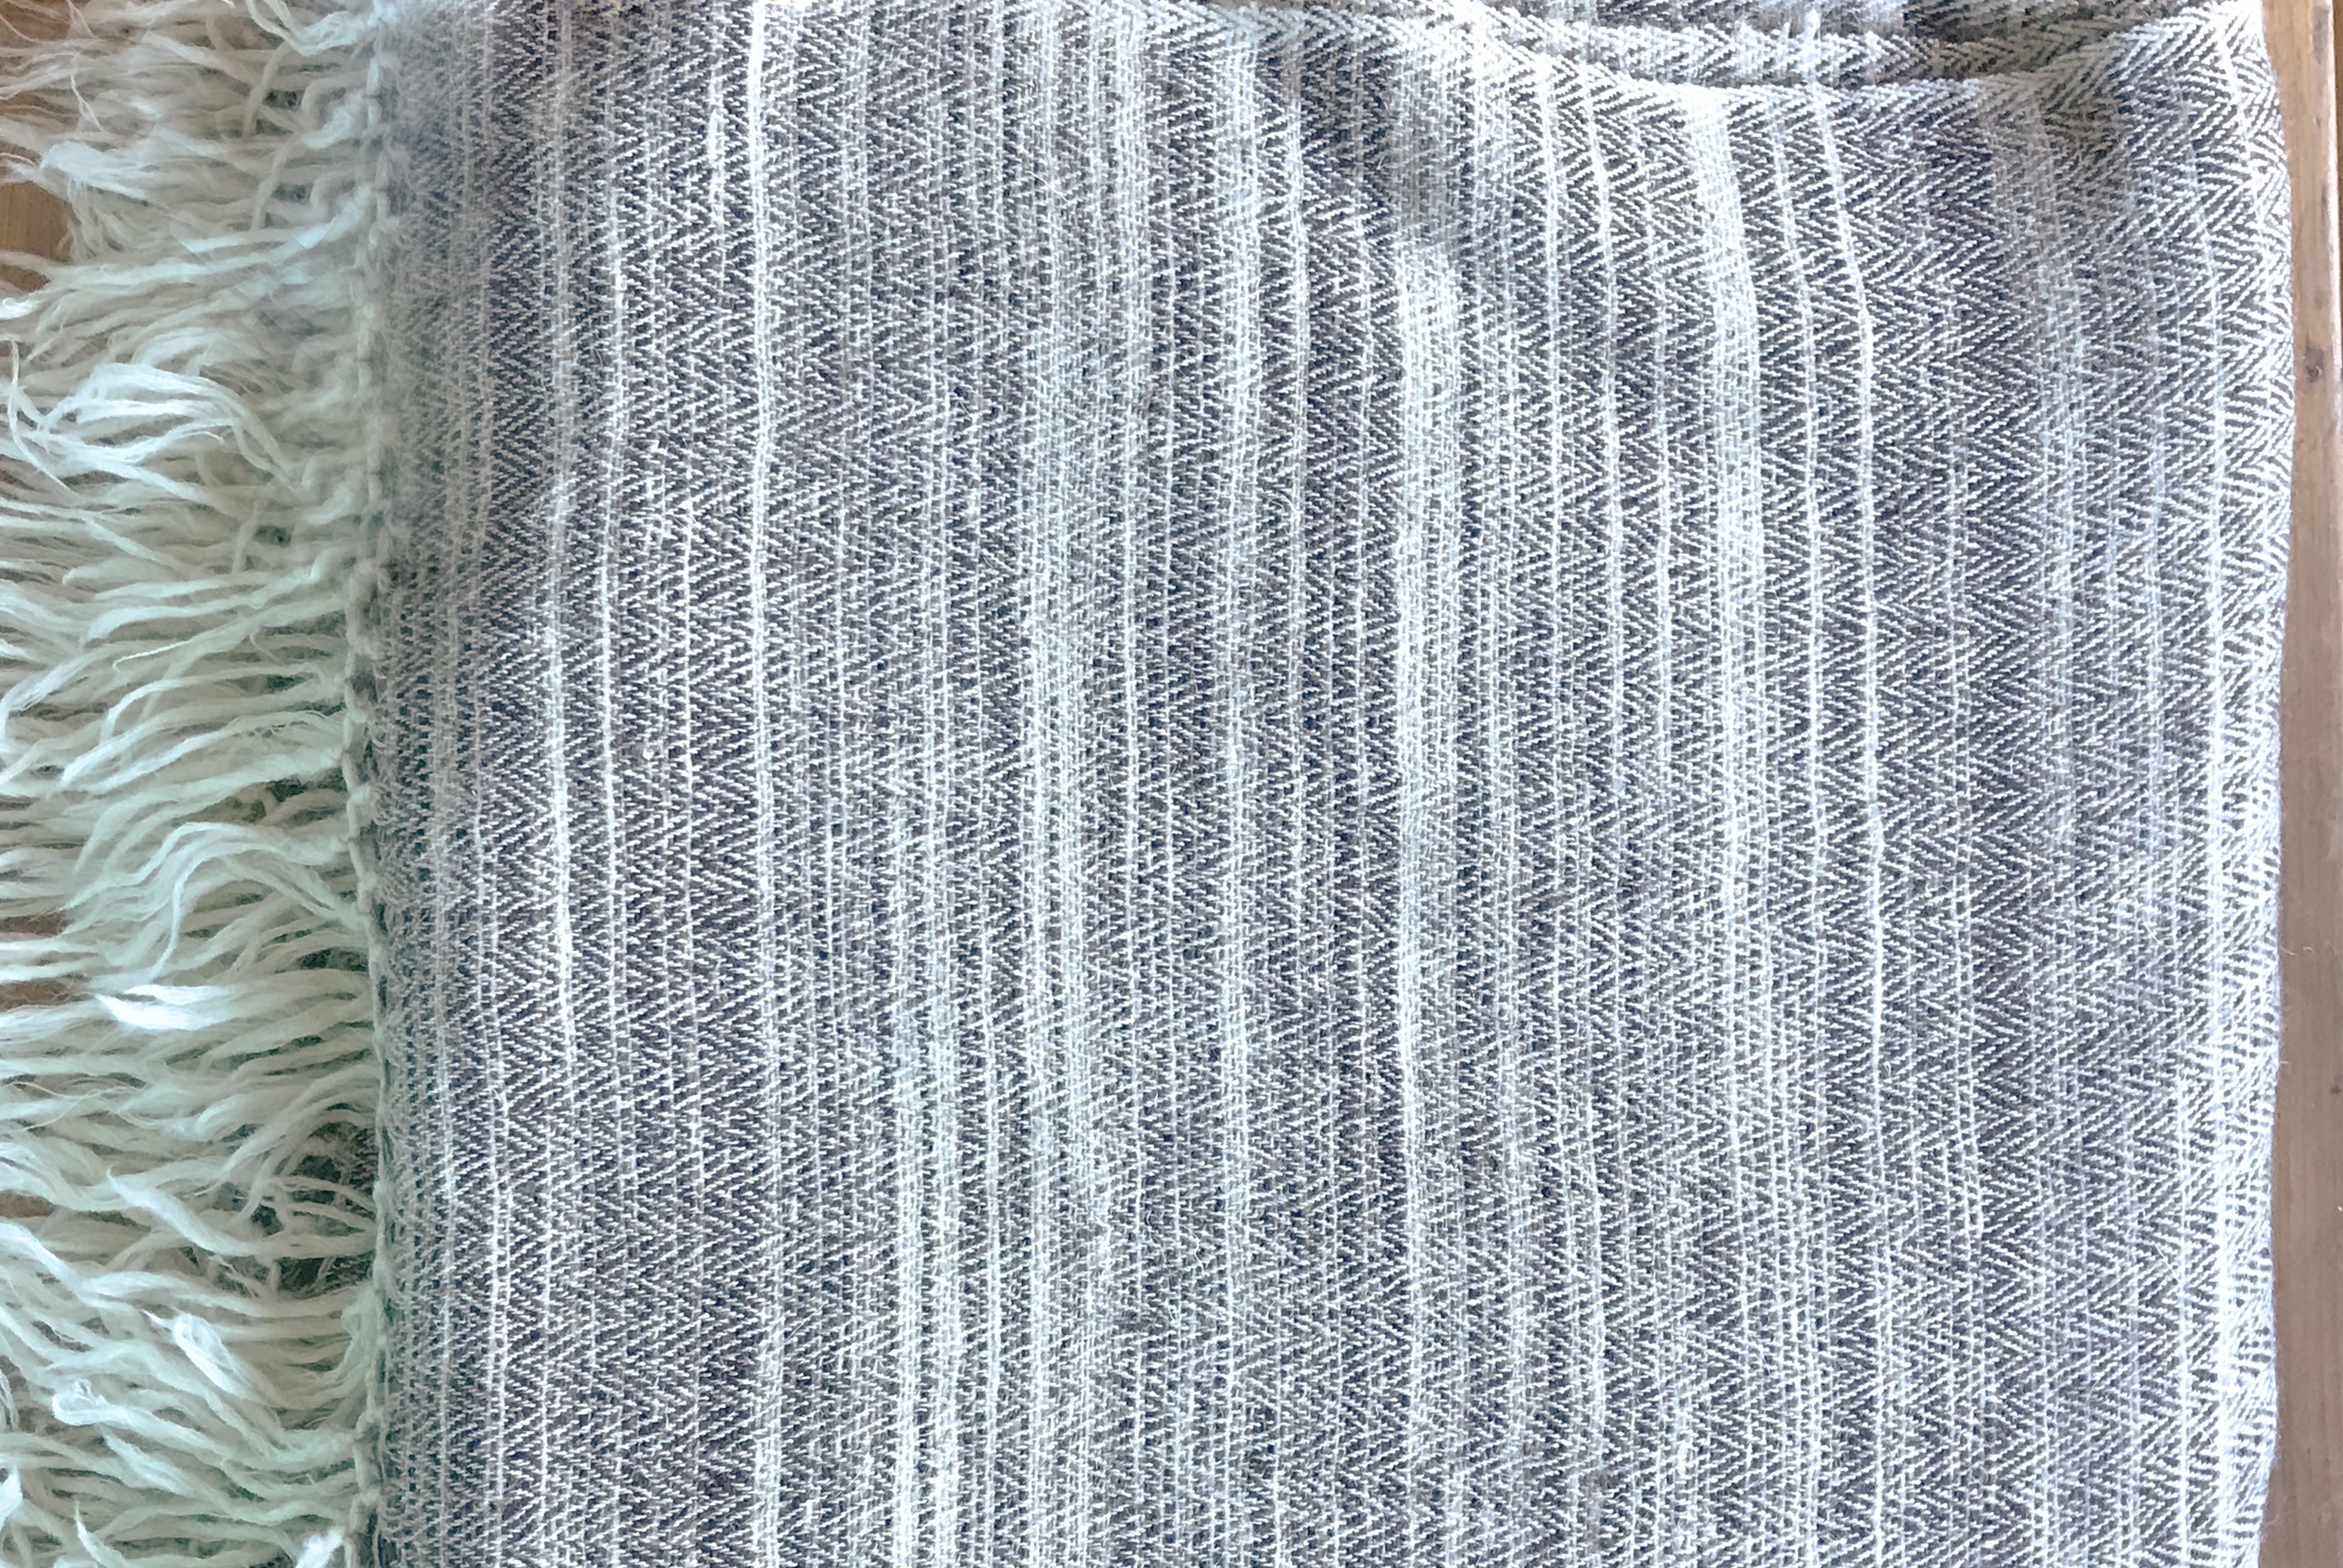 GIRISH - Himalayan Yak Wool Large Meditation Blanket